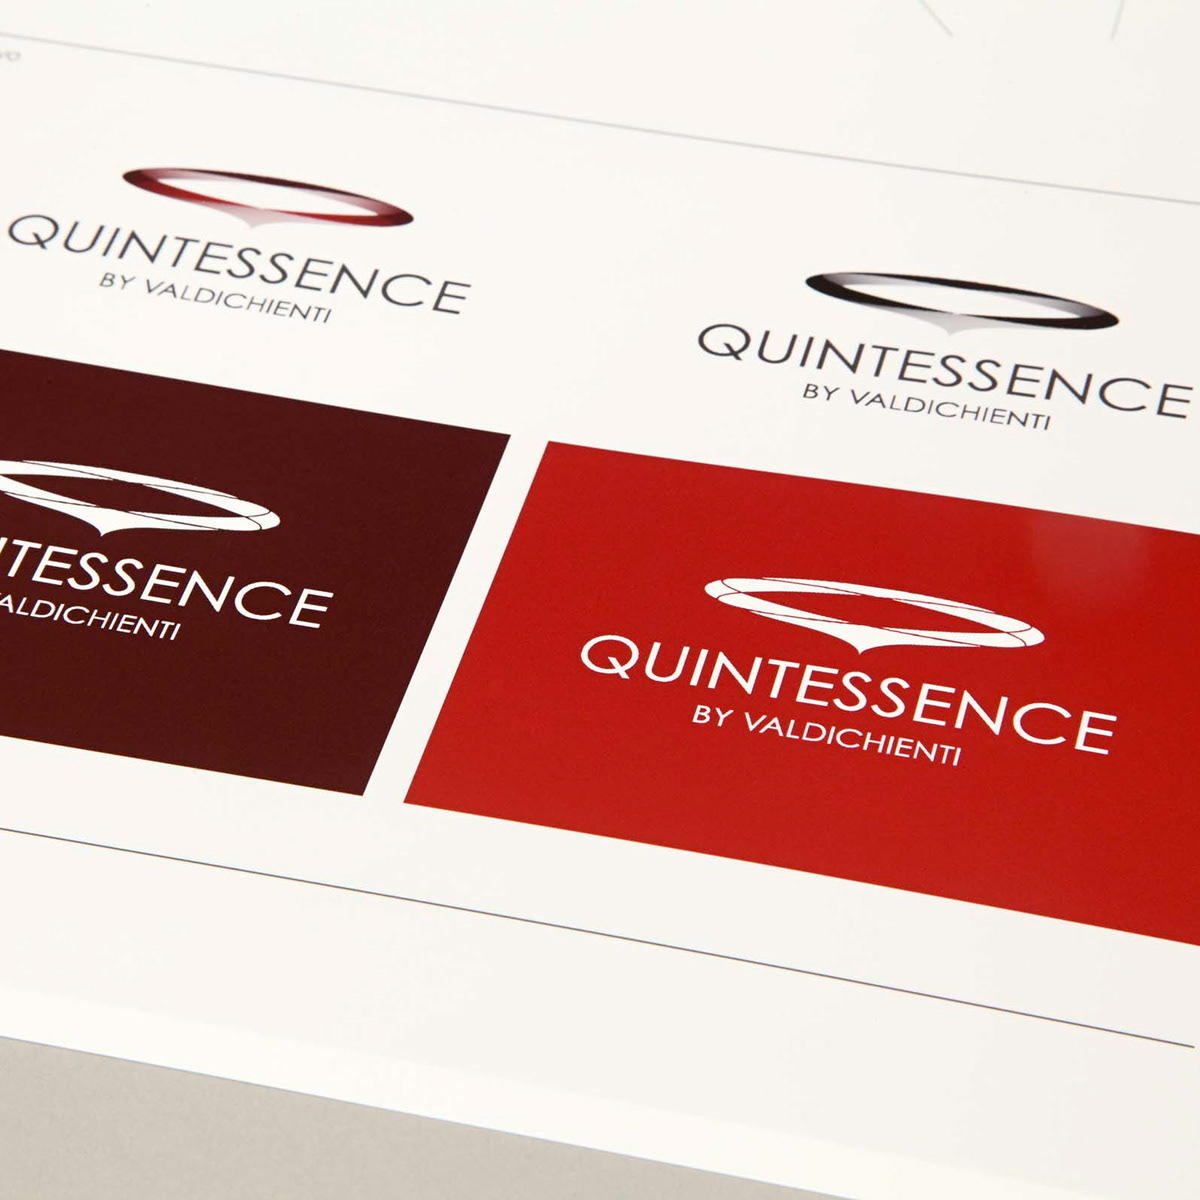 Quintessence  Valdichienti  graphic logo design photo stilyng santiesanti santi+santi